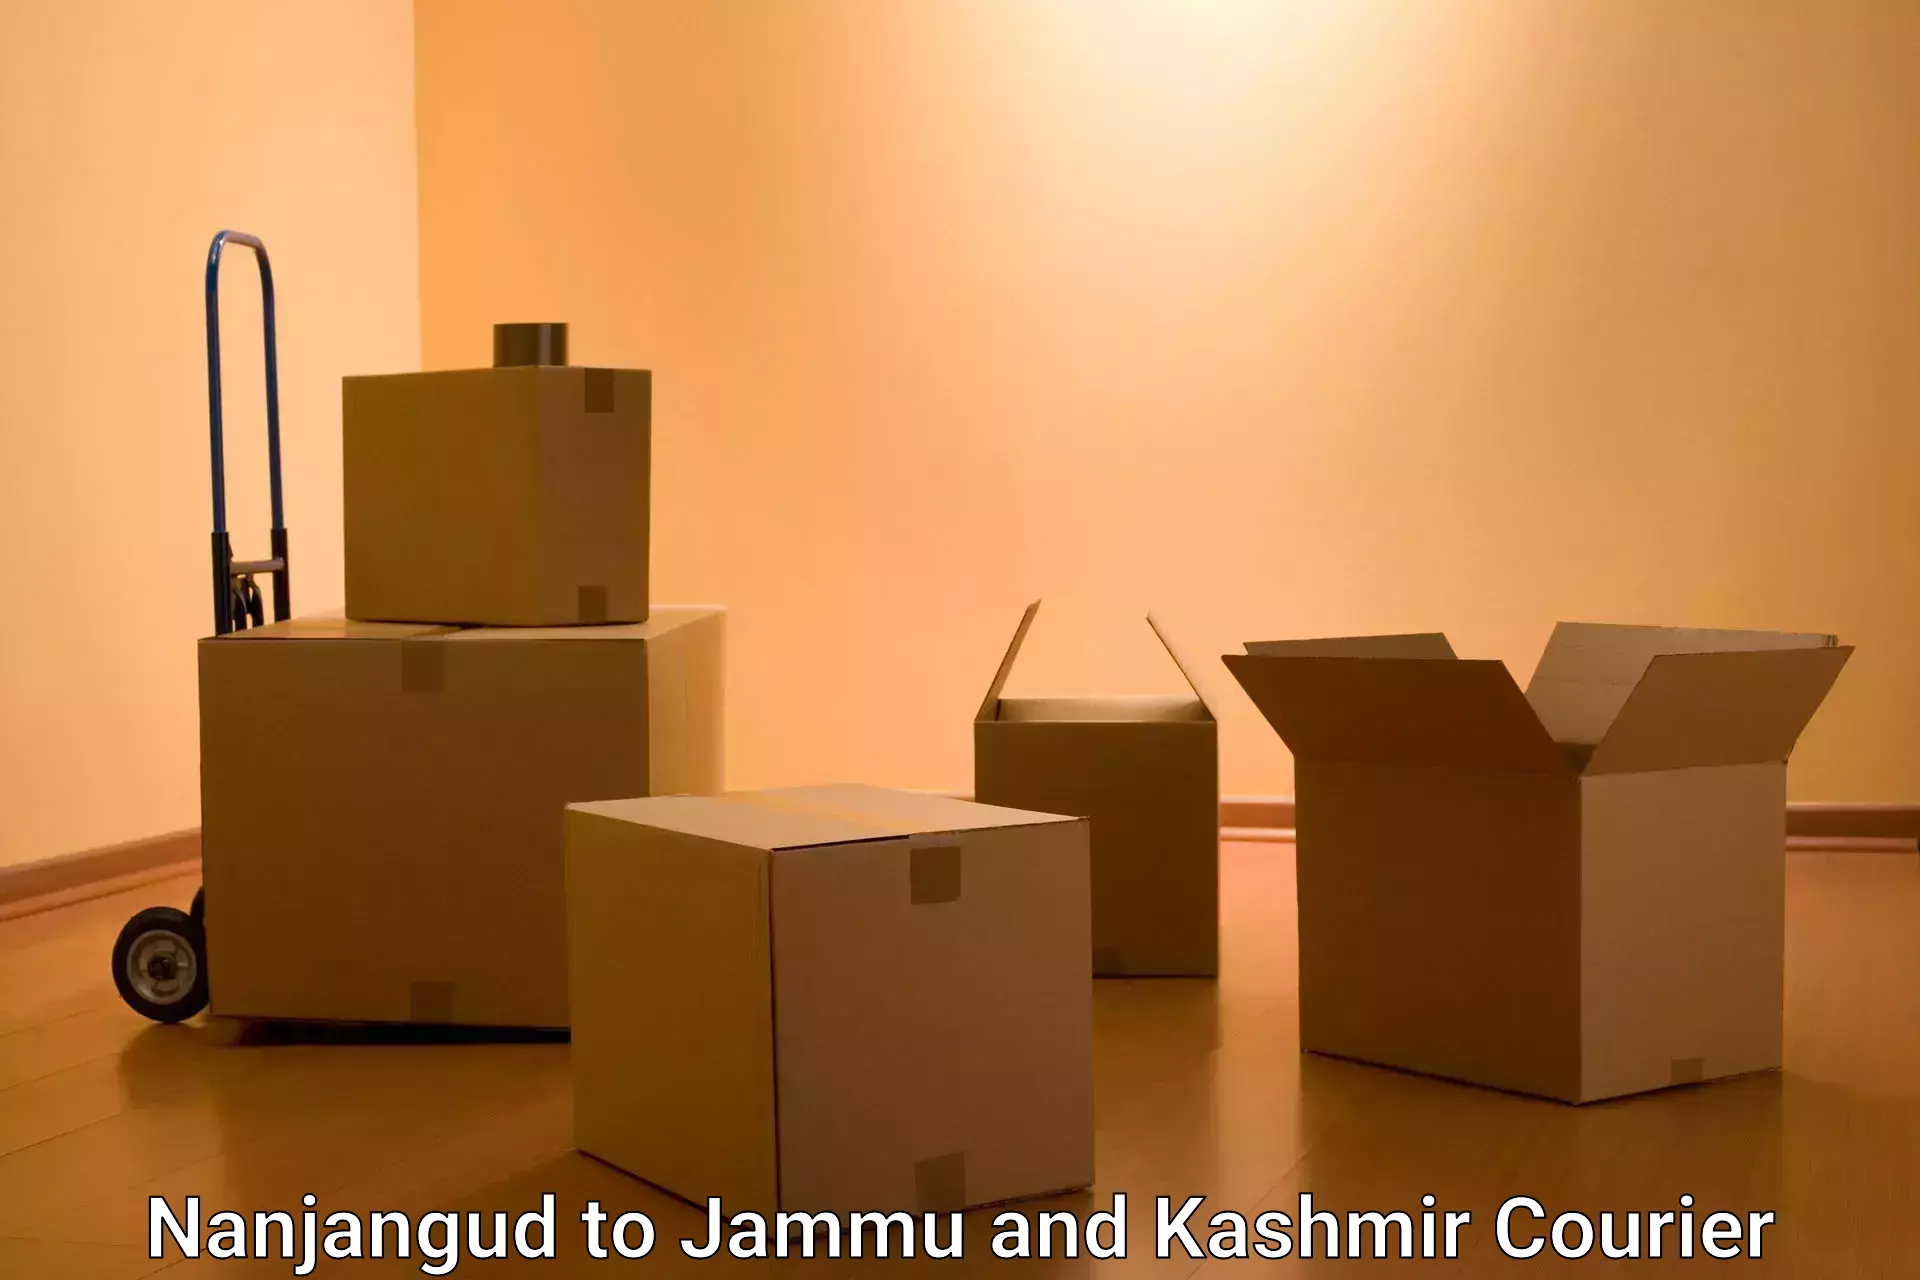 Shipping and handling Nanjangud to Srinagar Kashmir